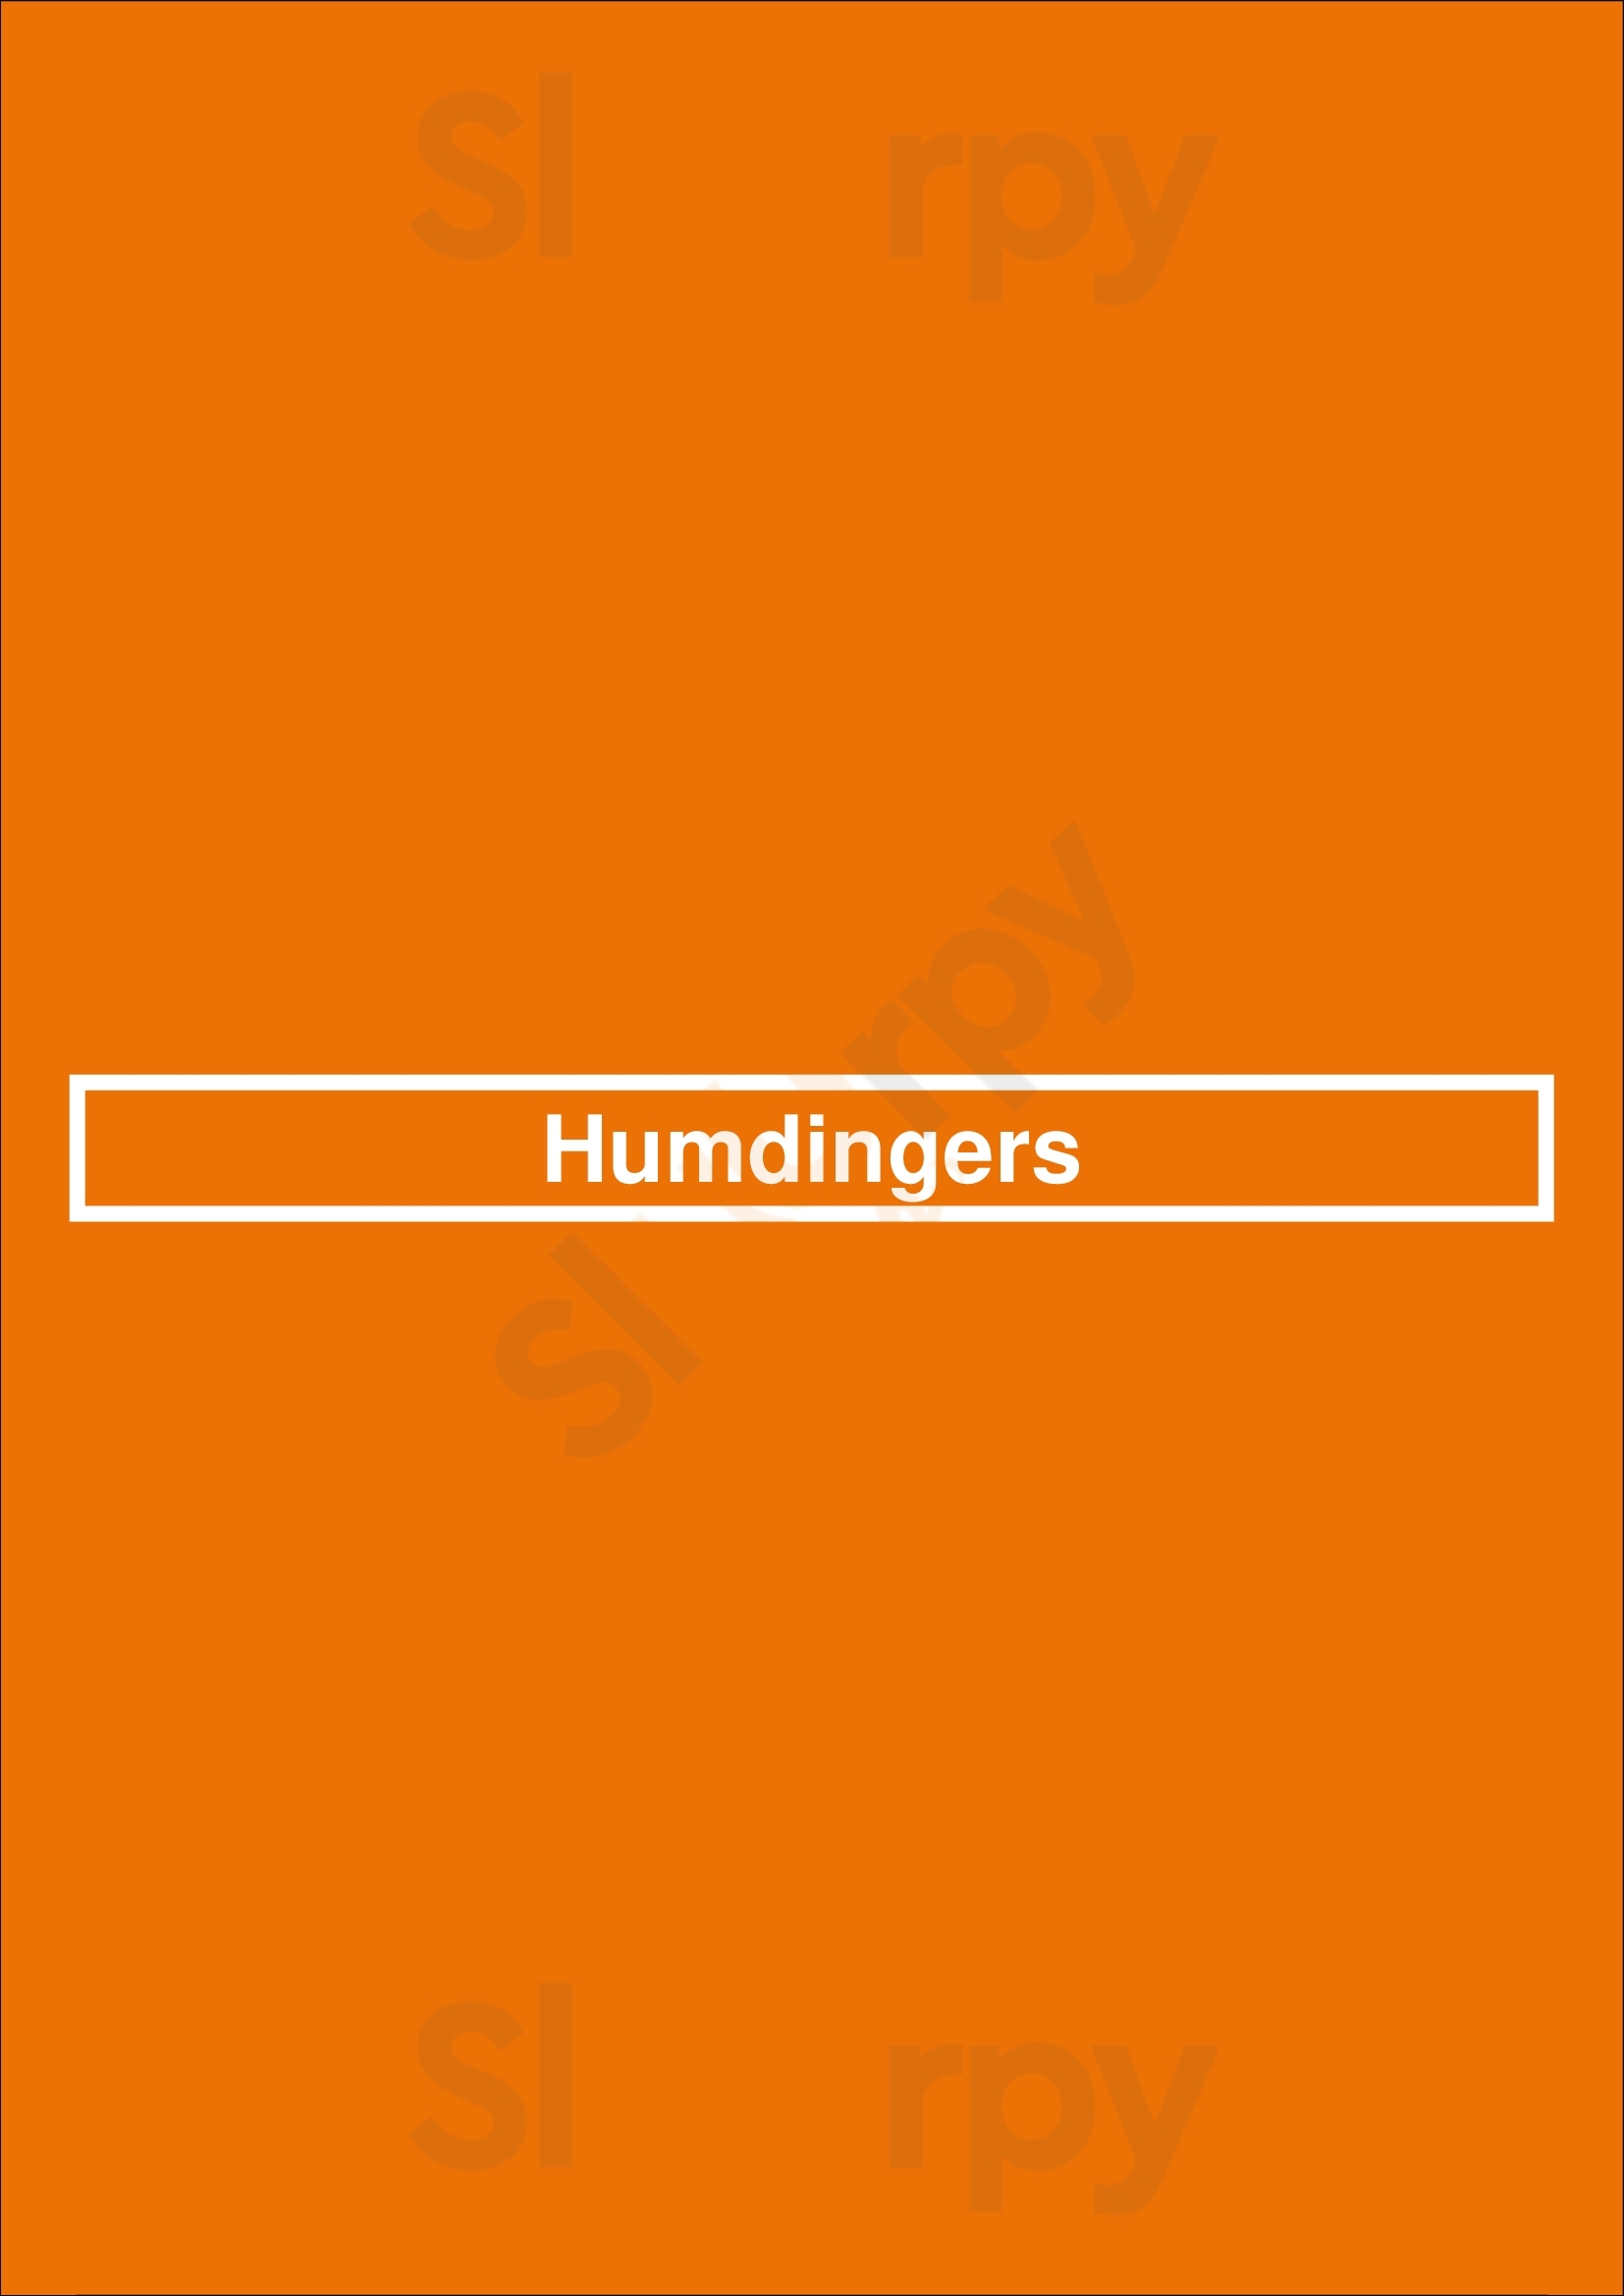 Humdingers Memphis Menu - 1